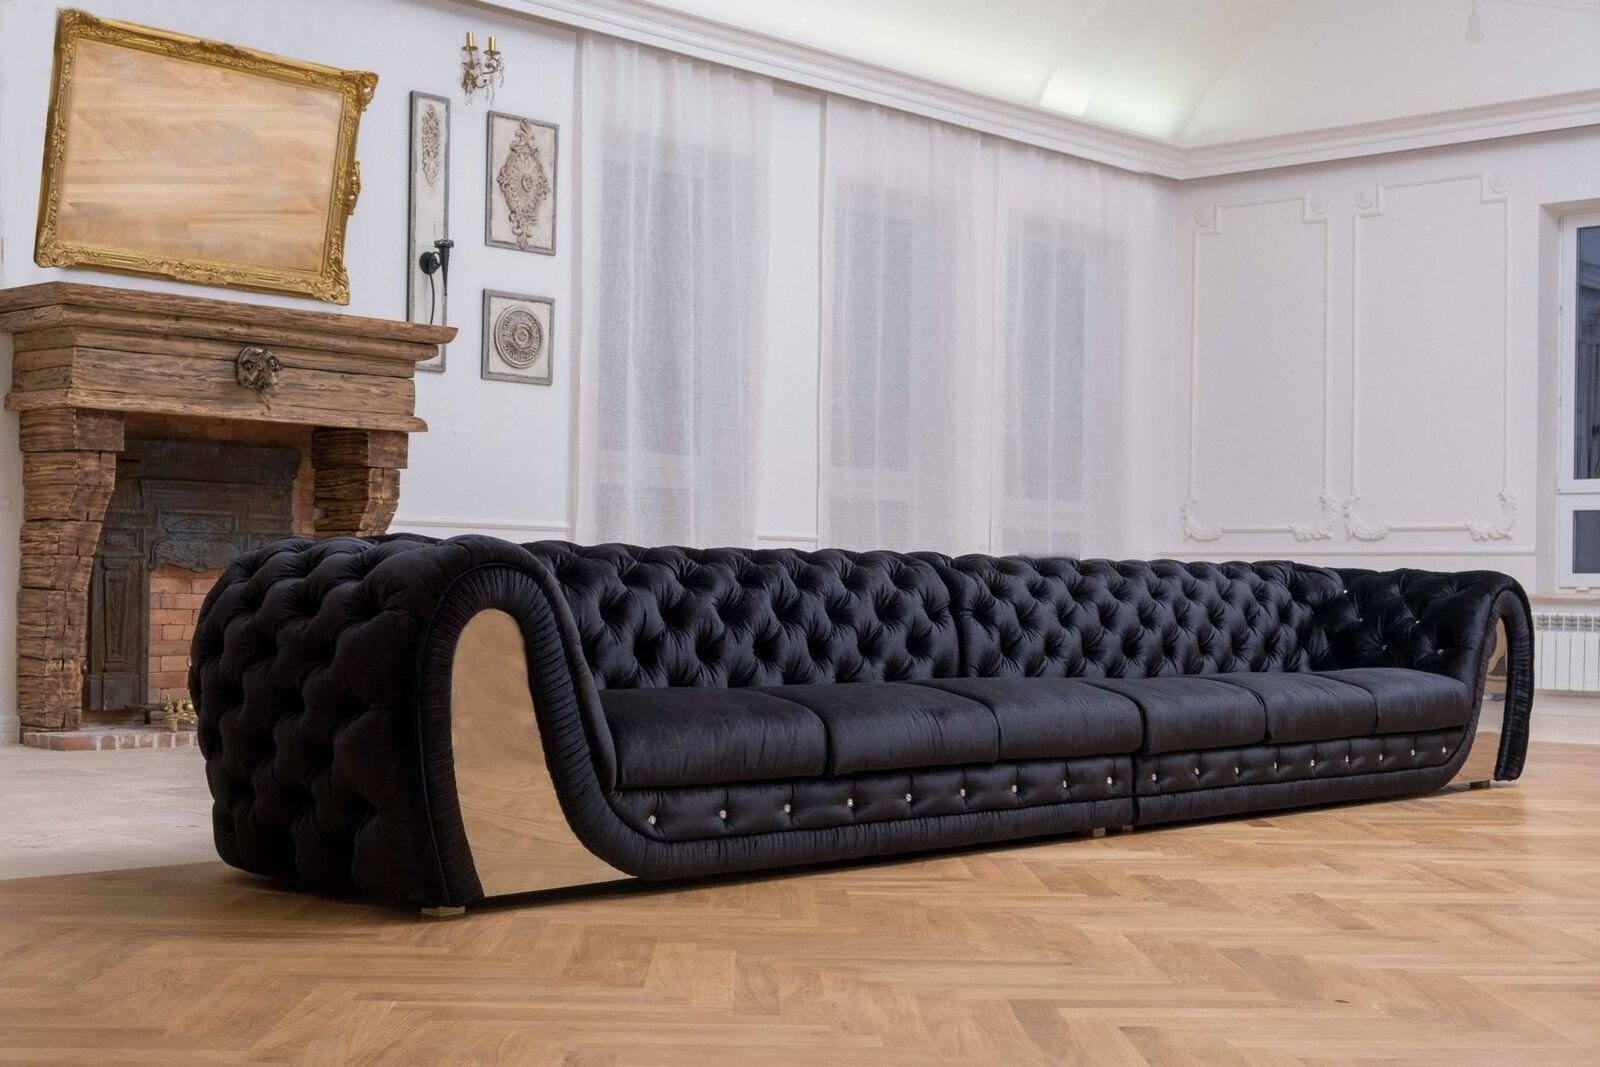 JVmoebel Big-Sofa, Sofas 6 Sitzer Textil Big Xxl Wohnzimmer Stoff Neu Sofa Couch